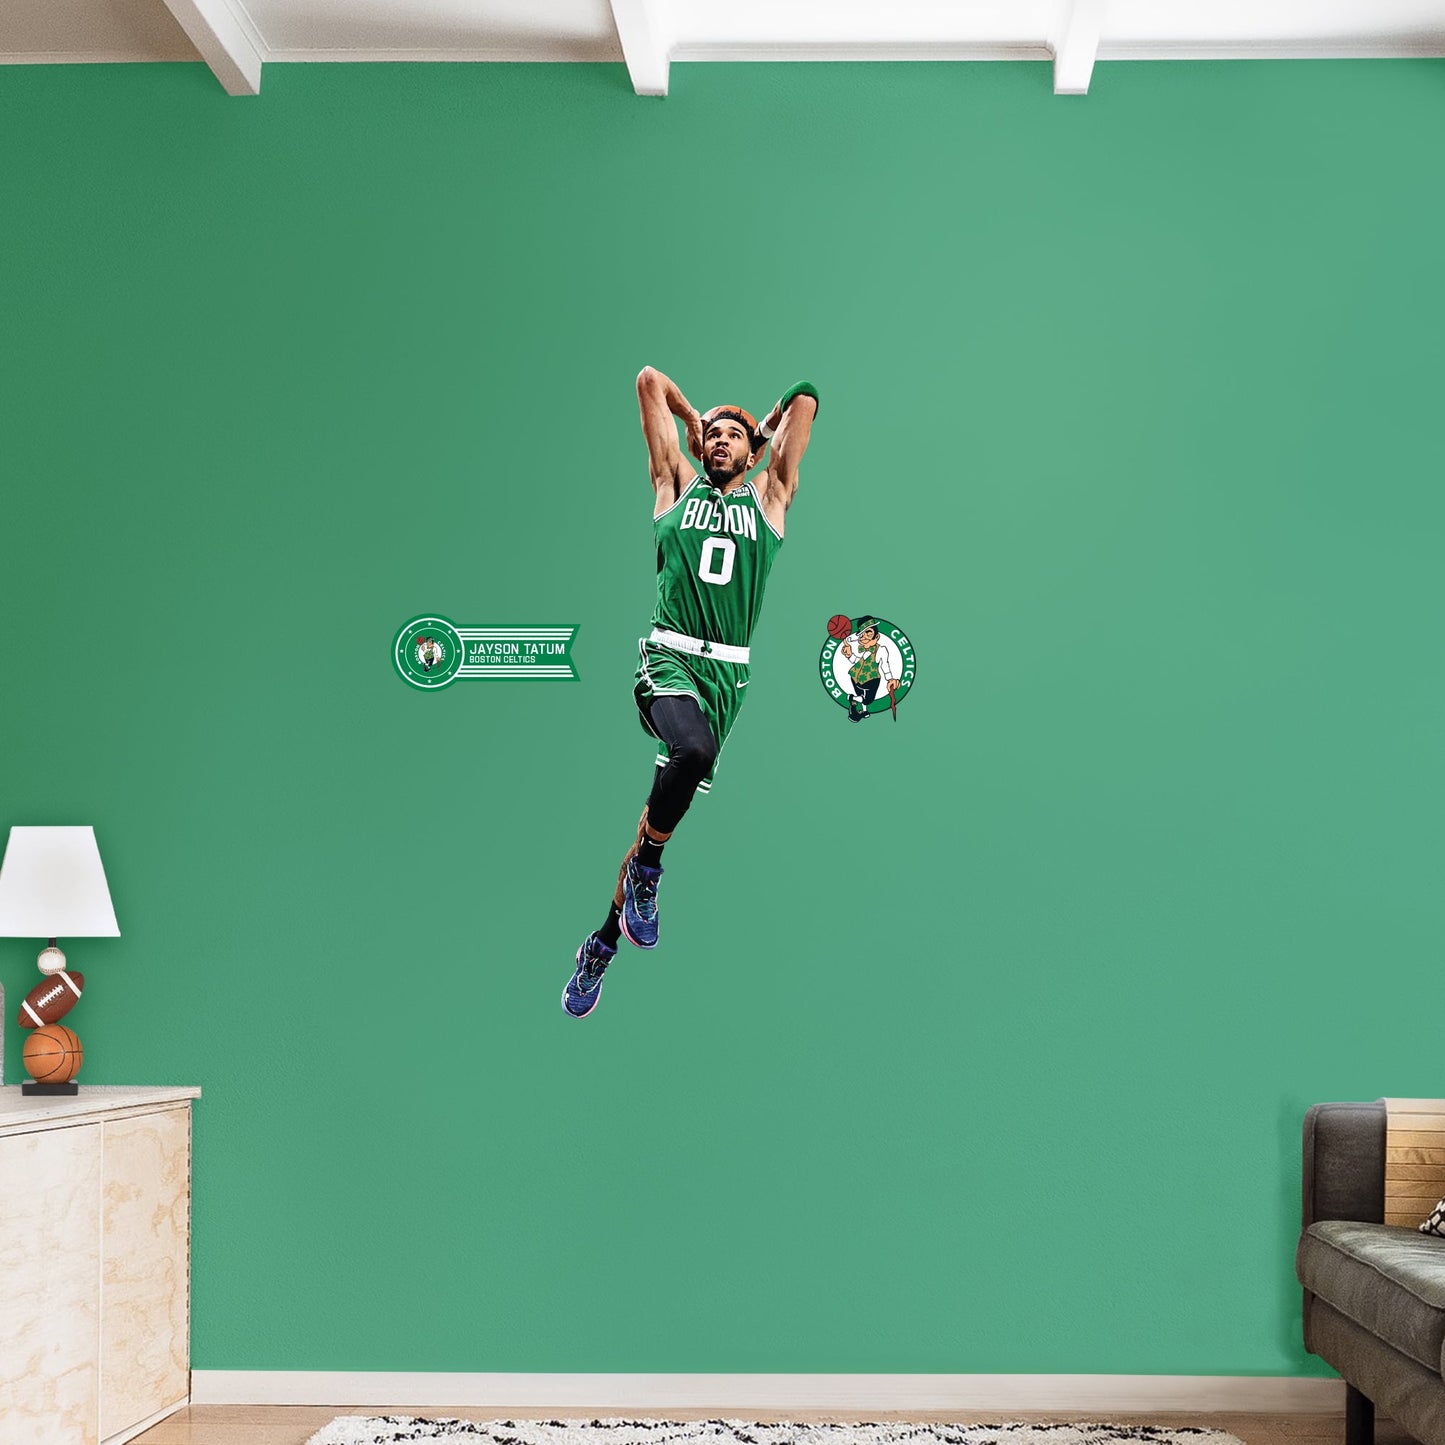 Boston Celtics: Jayson Tatum Dunk - Officially Licensed NBA Removable Adhesive Decal